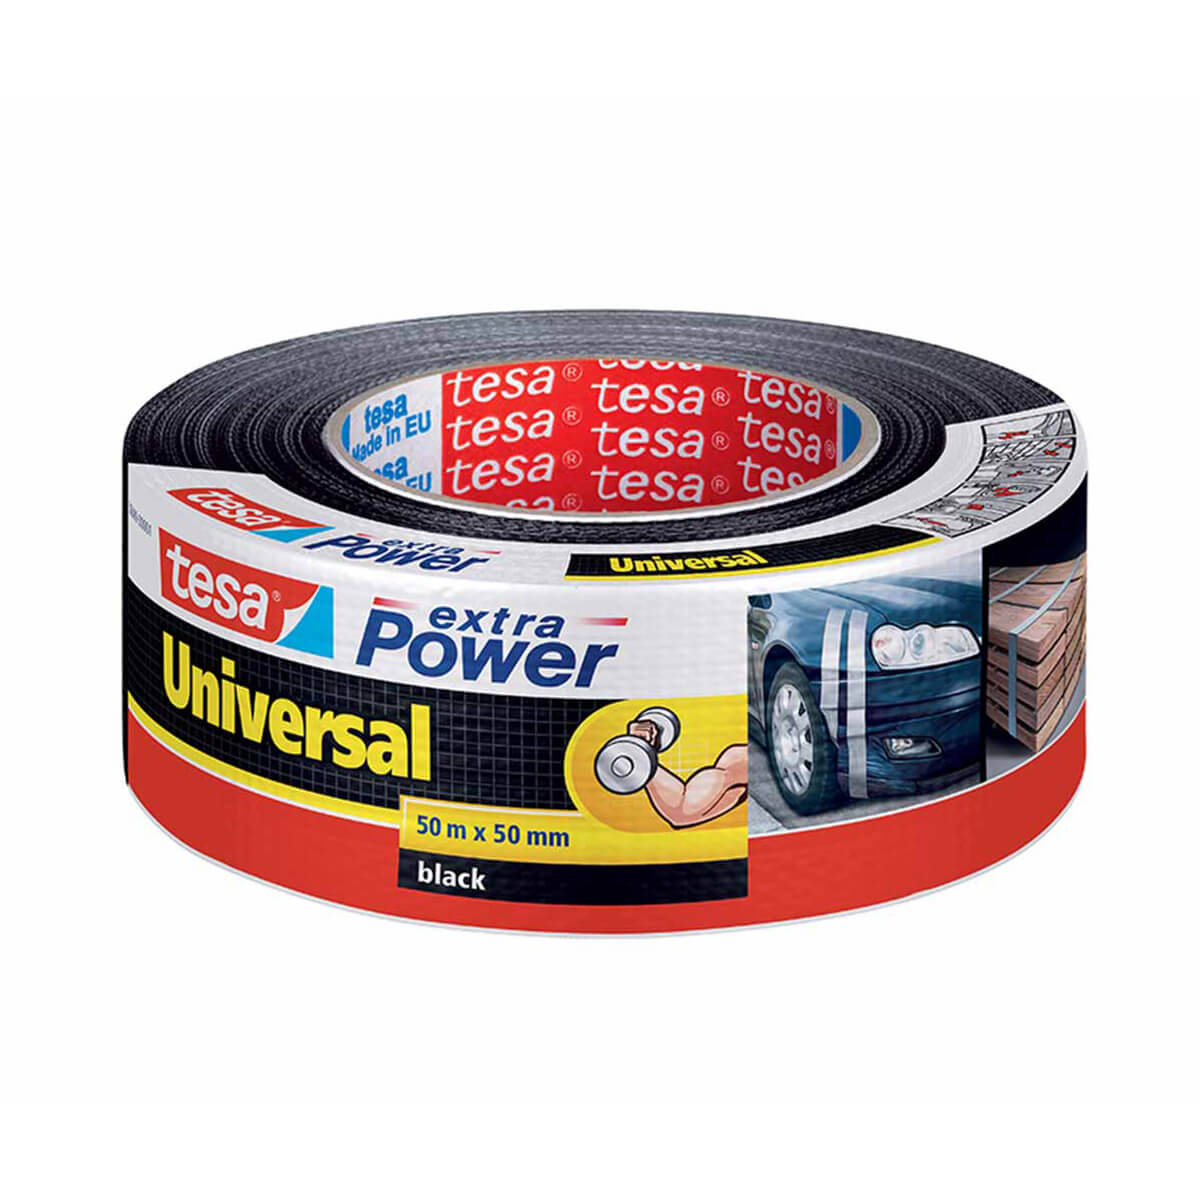 tesa Adhesive Tape extra Power 50mx50mm Fabric Reinforced Film Tape Black